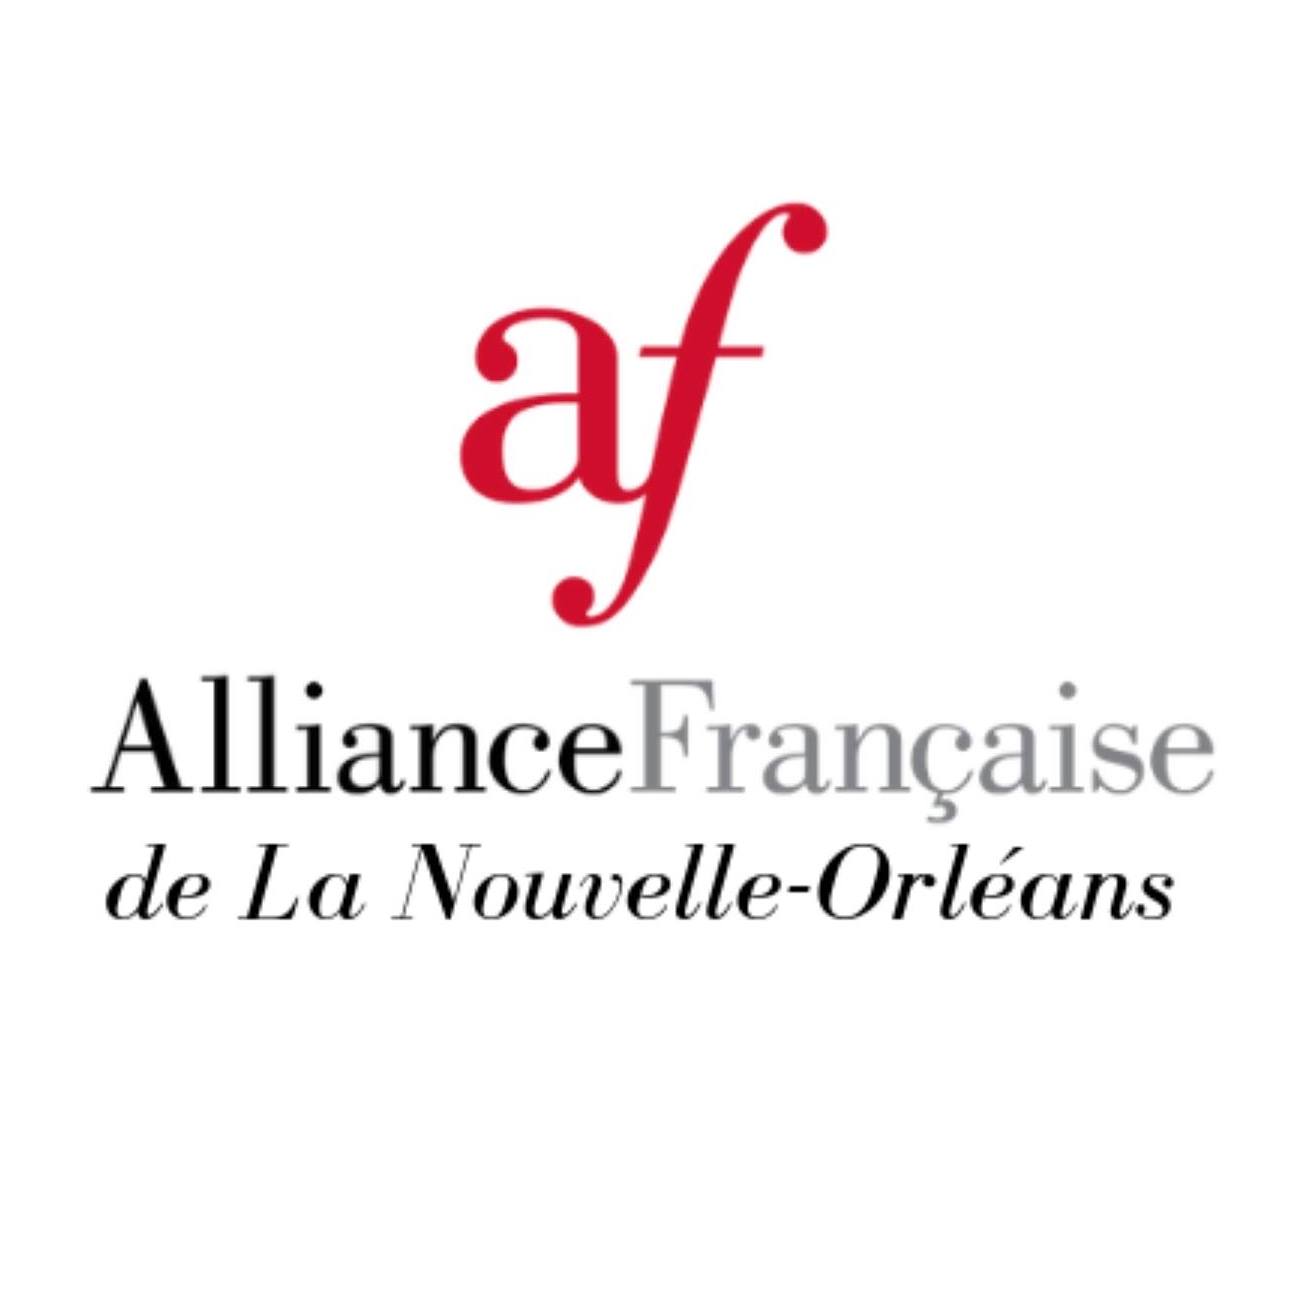 French Speaking Organization in USA - Alliance Francaise de la Nouvelle Orléans